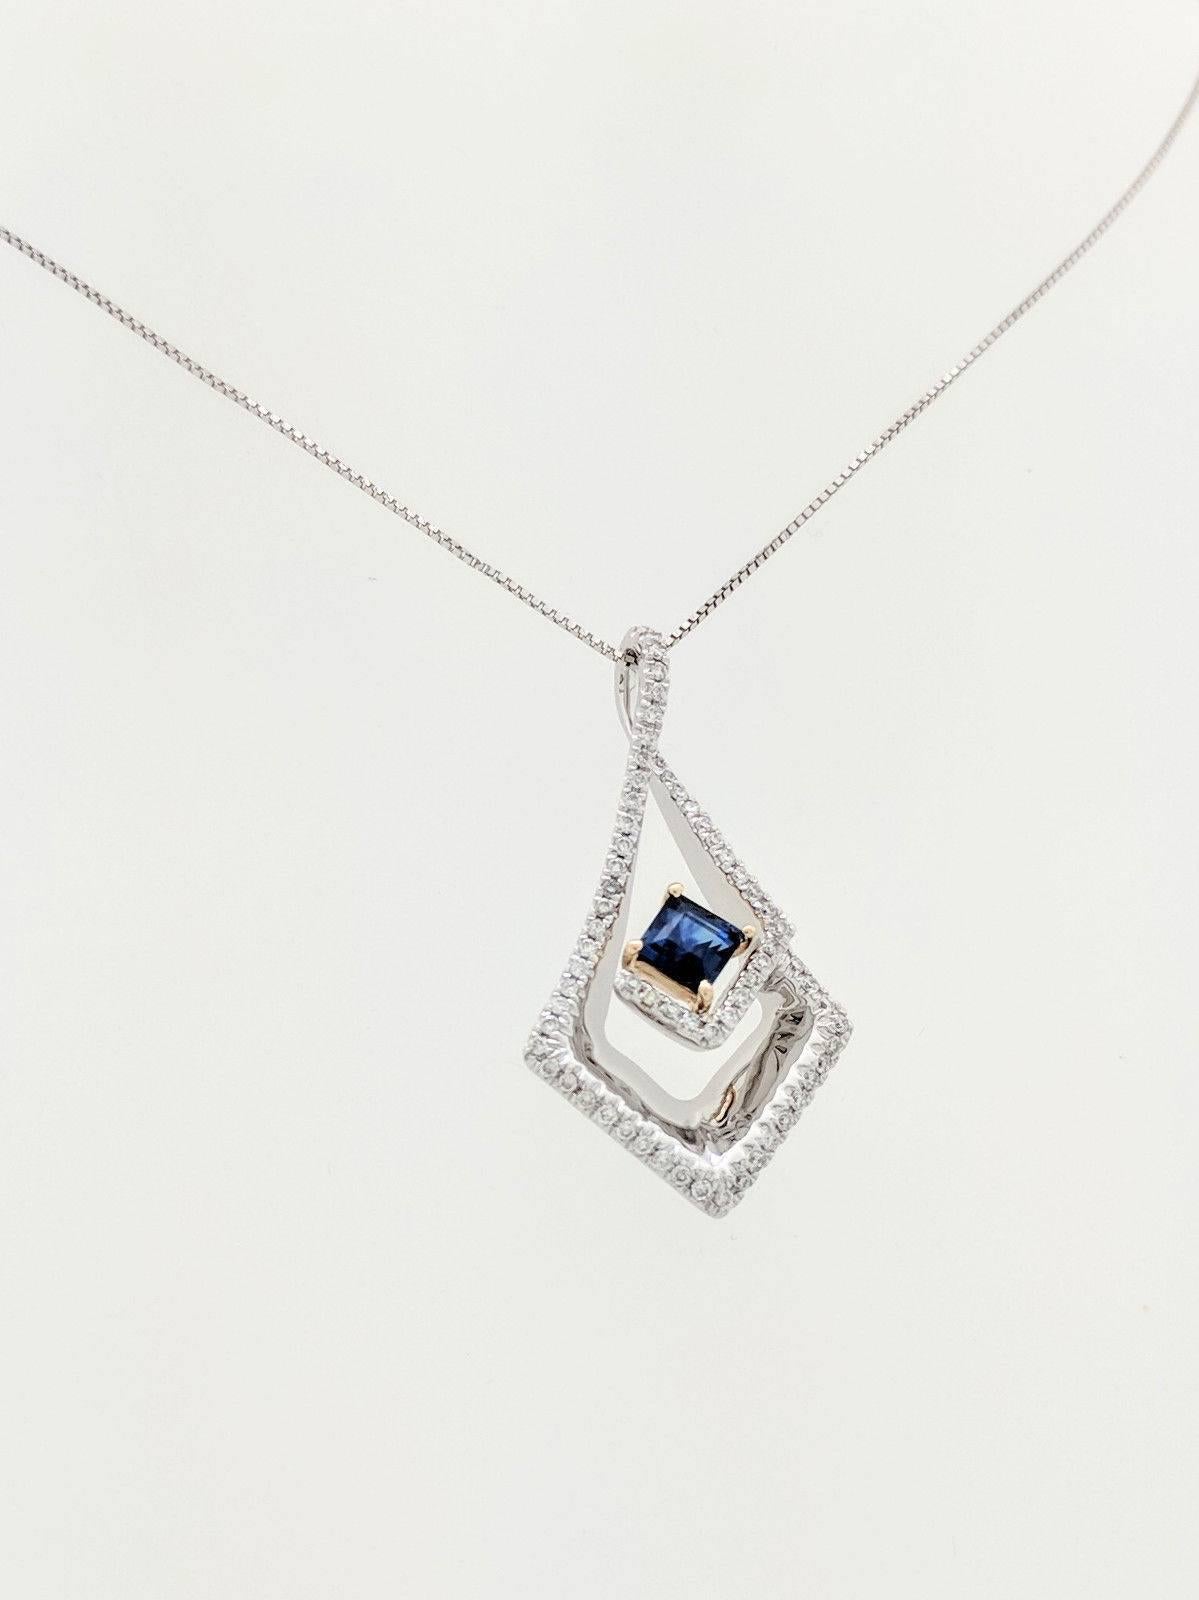 Contemporary 14 Karat Two-Tone Diamond and Sapphire Pendant Necklace